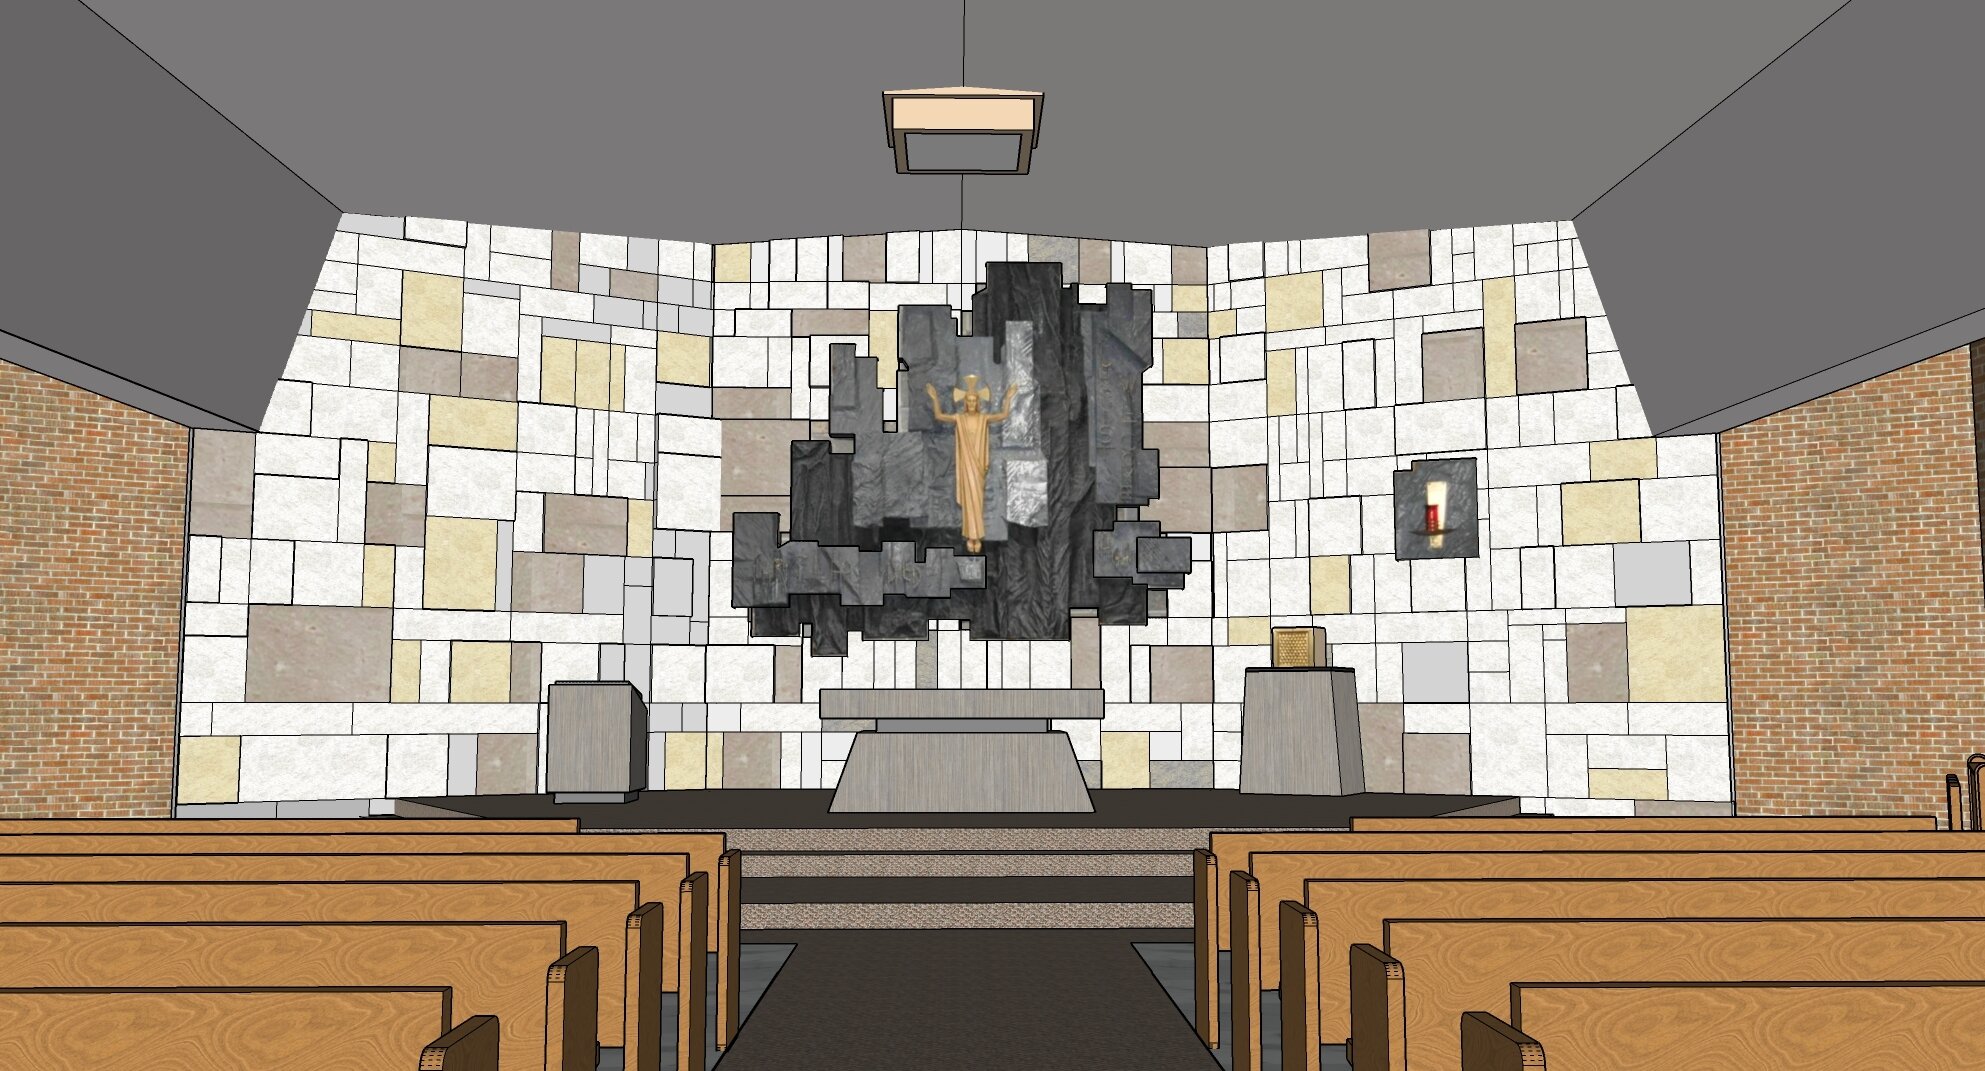   Existing church interior  